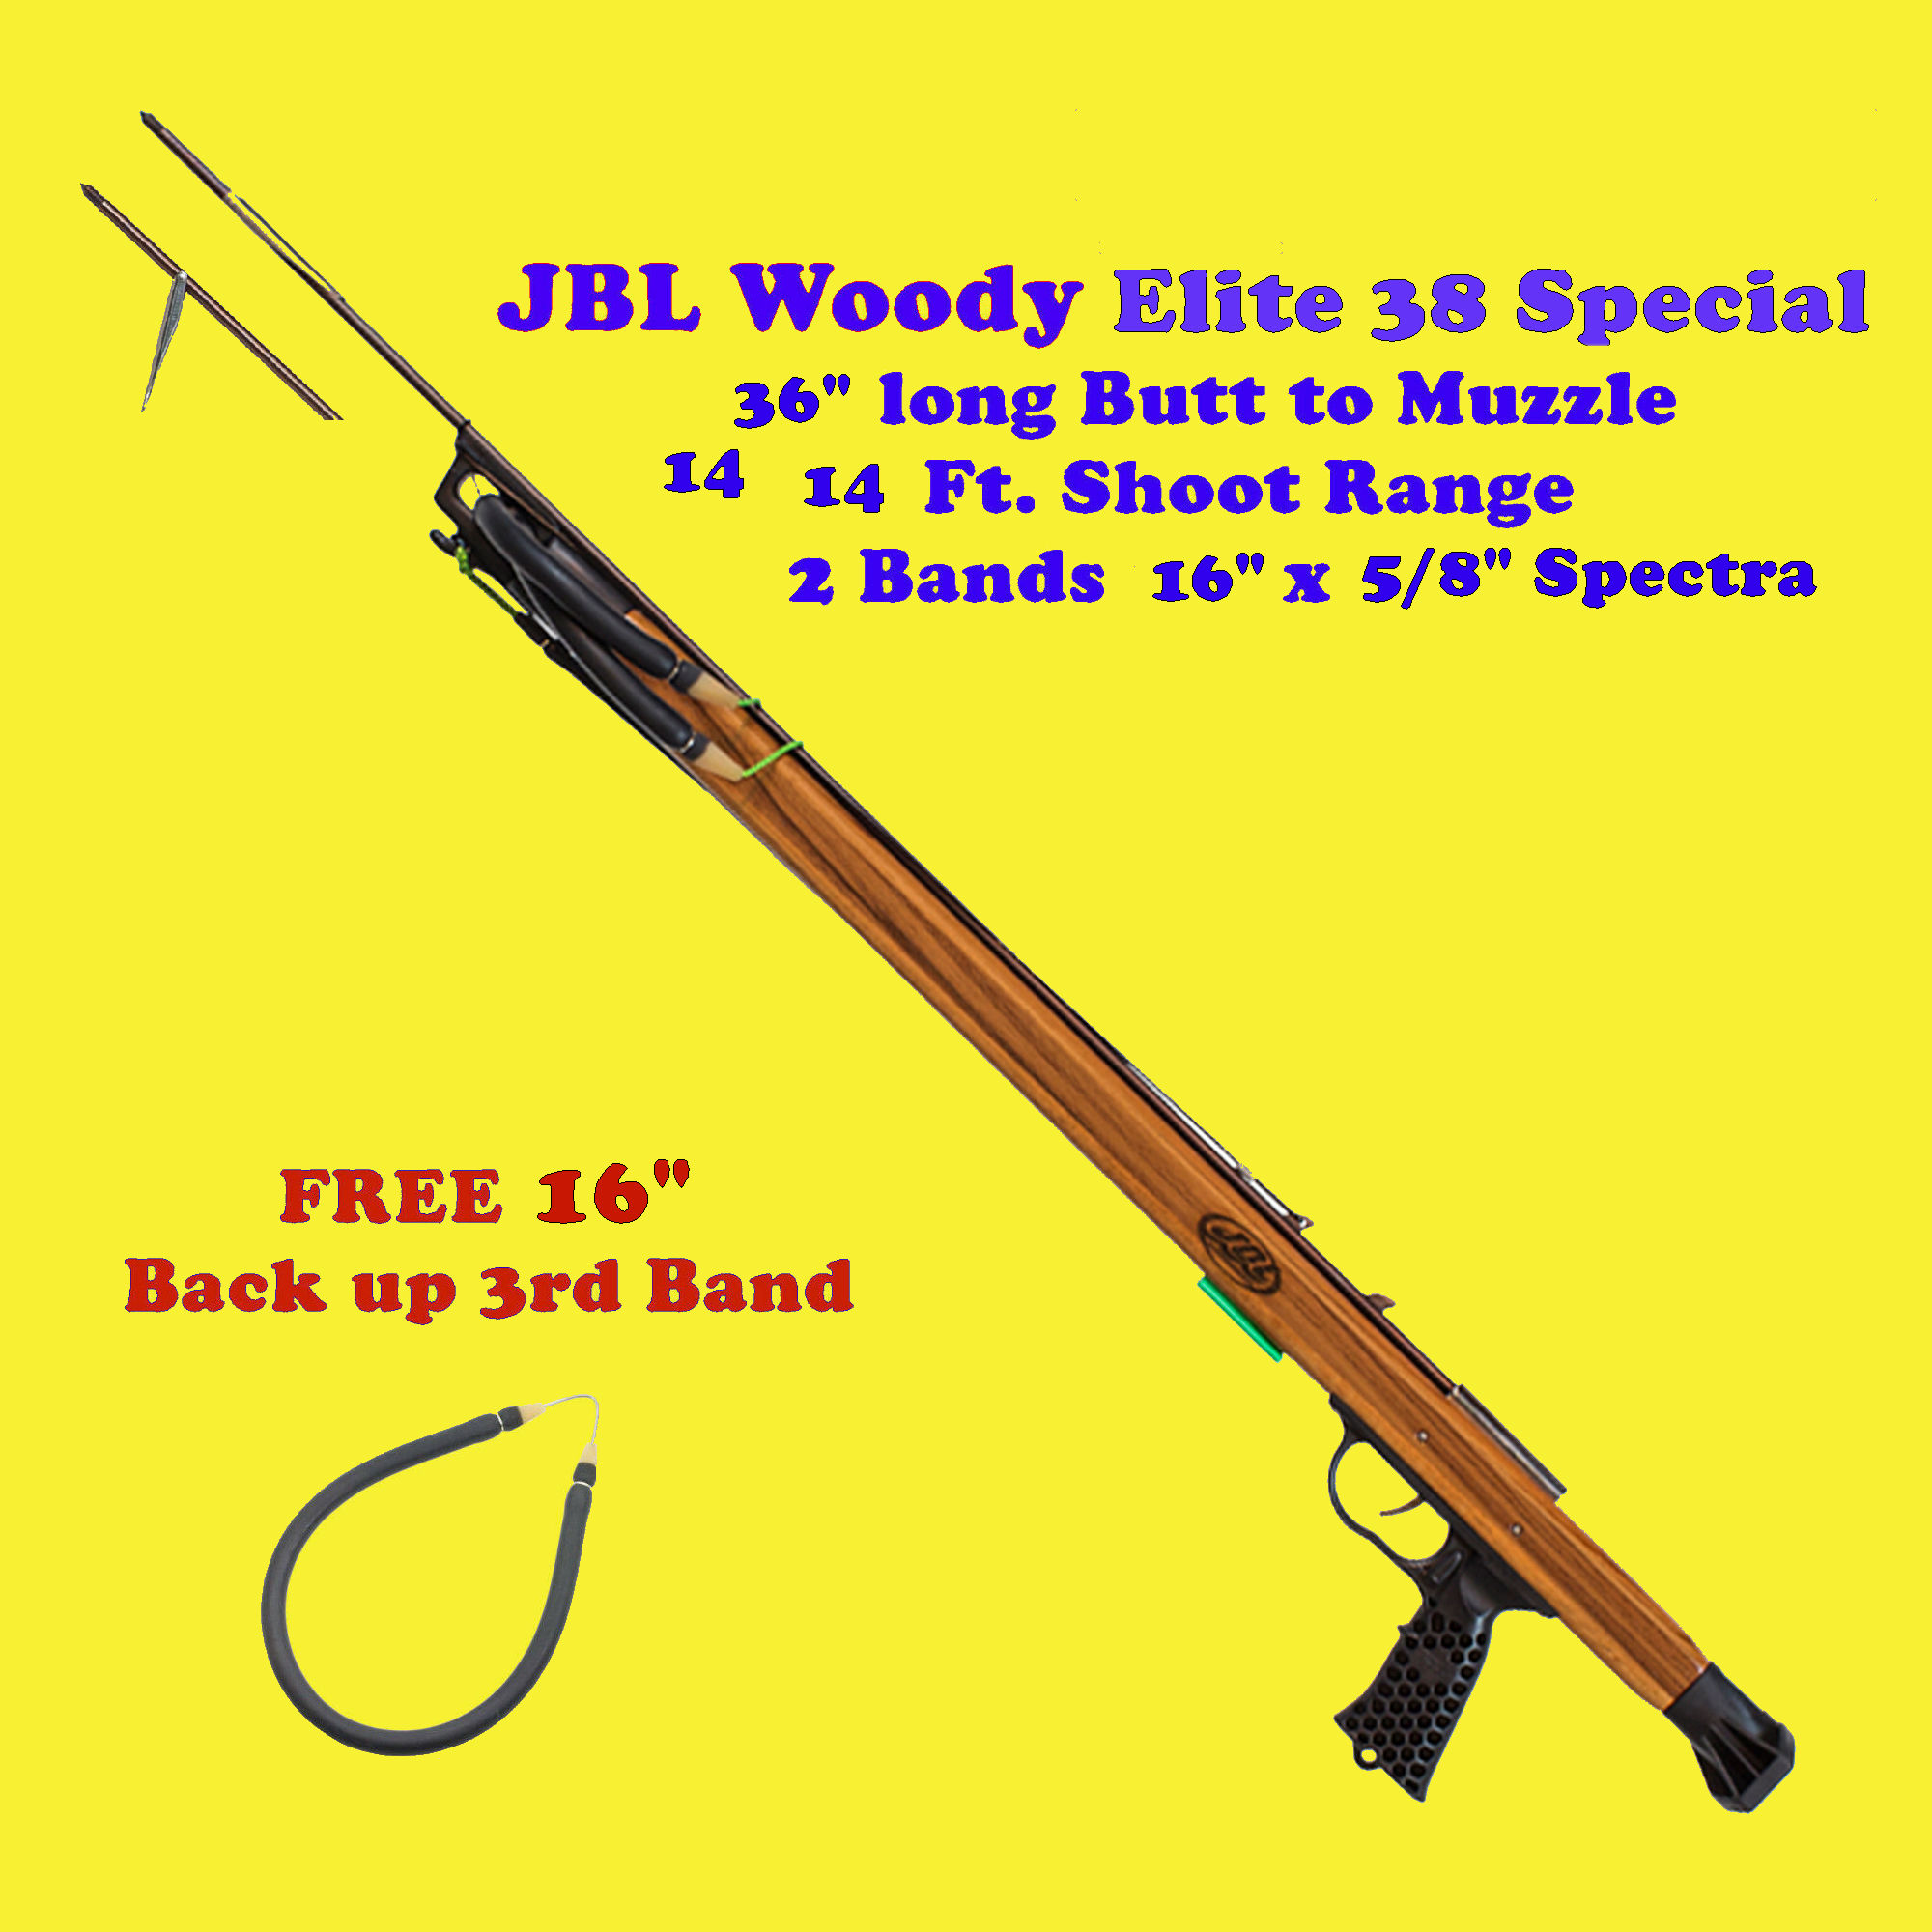 FREE Xtra Band w/ JBL D7 Carbine Speargun Spear gun fish catch shoot spearfish 